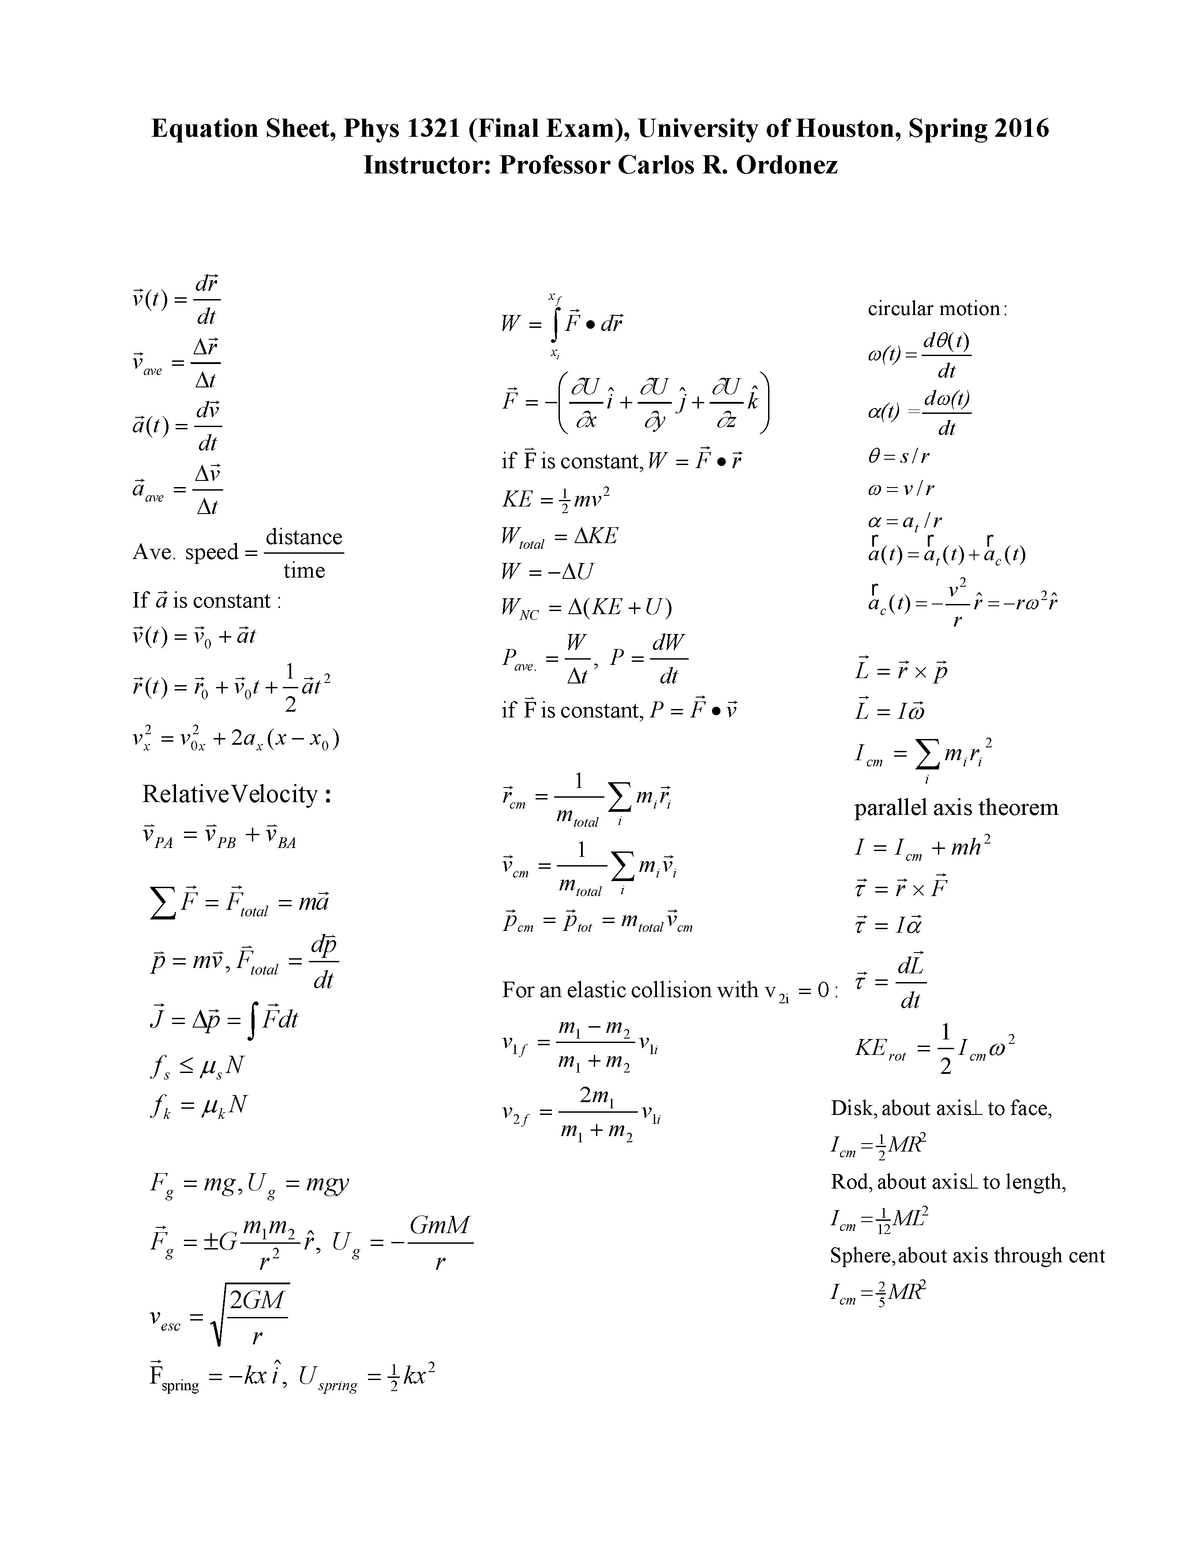 Uiuc physics 101 equation sheet - mresX